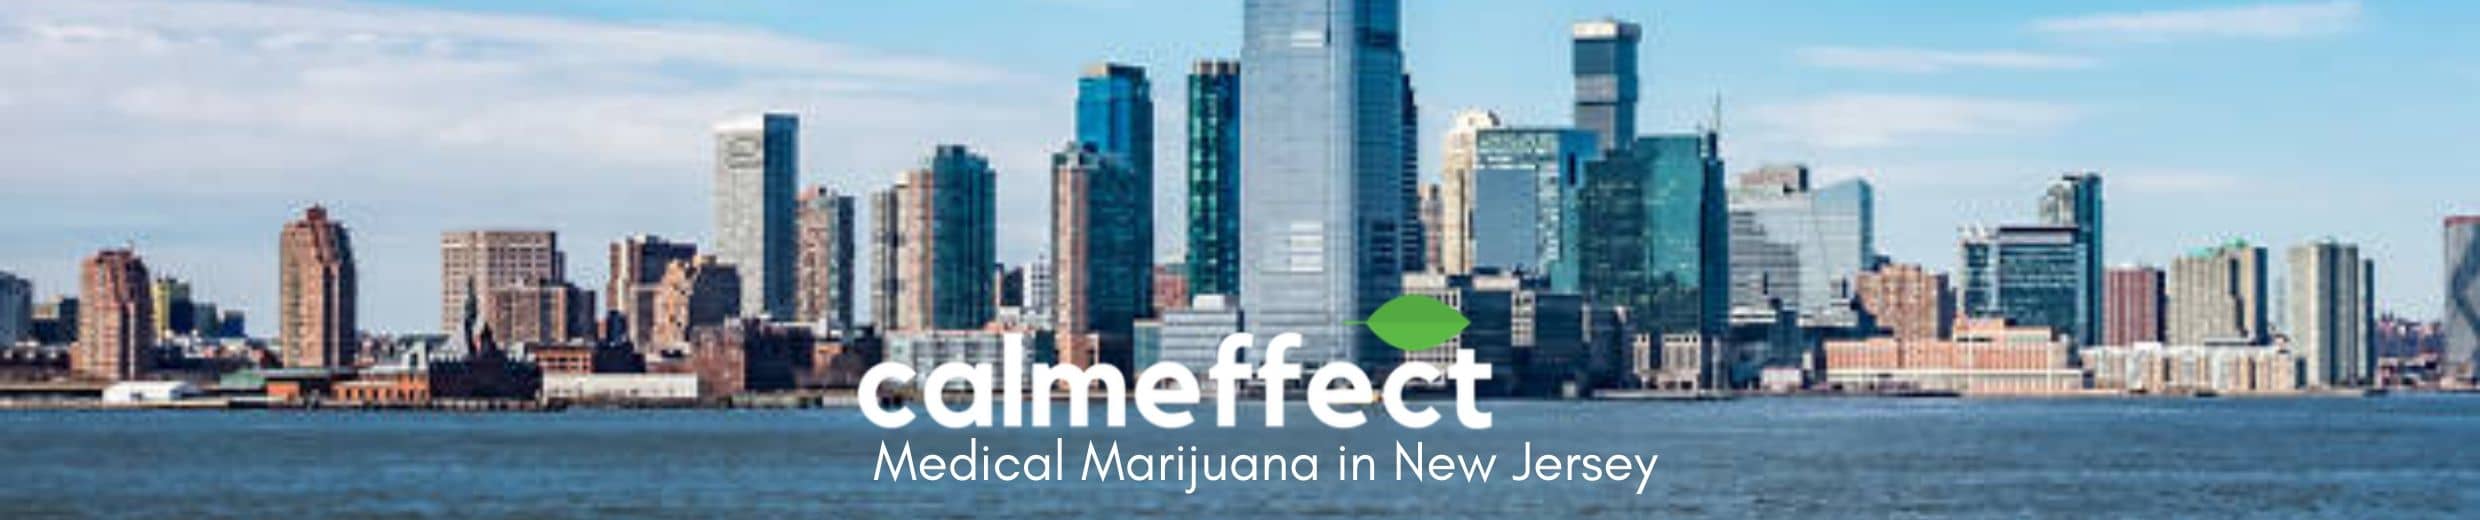 Medical Marijuana in New Jersey